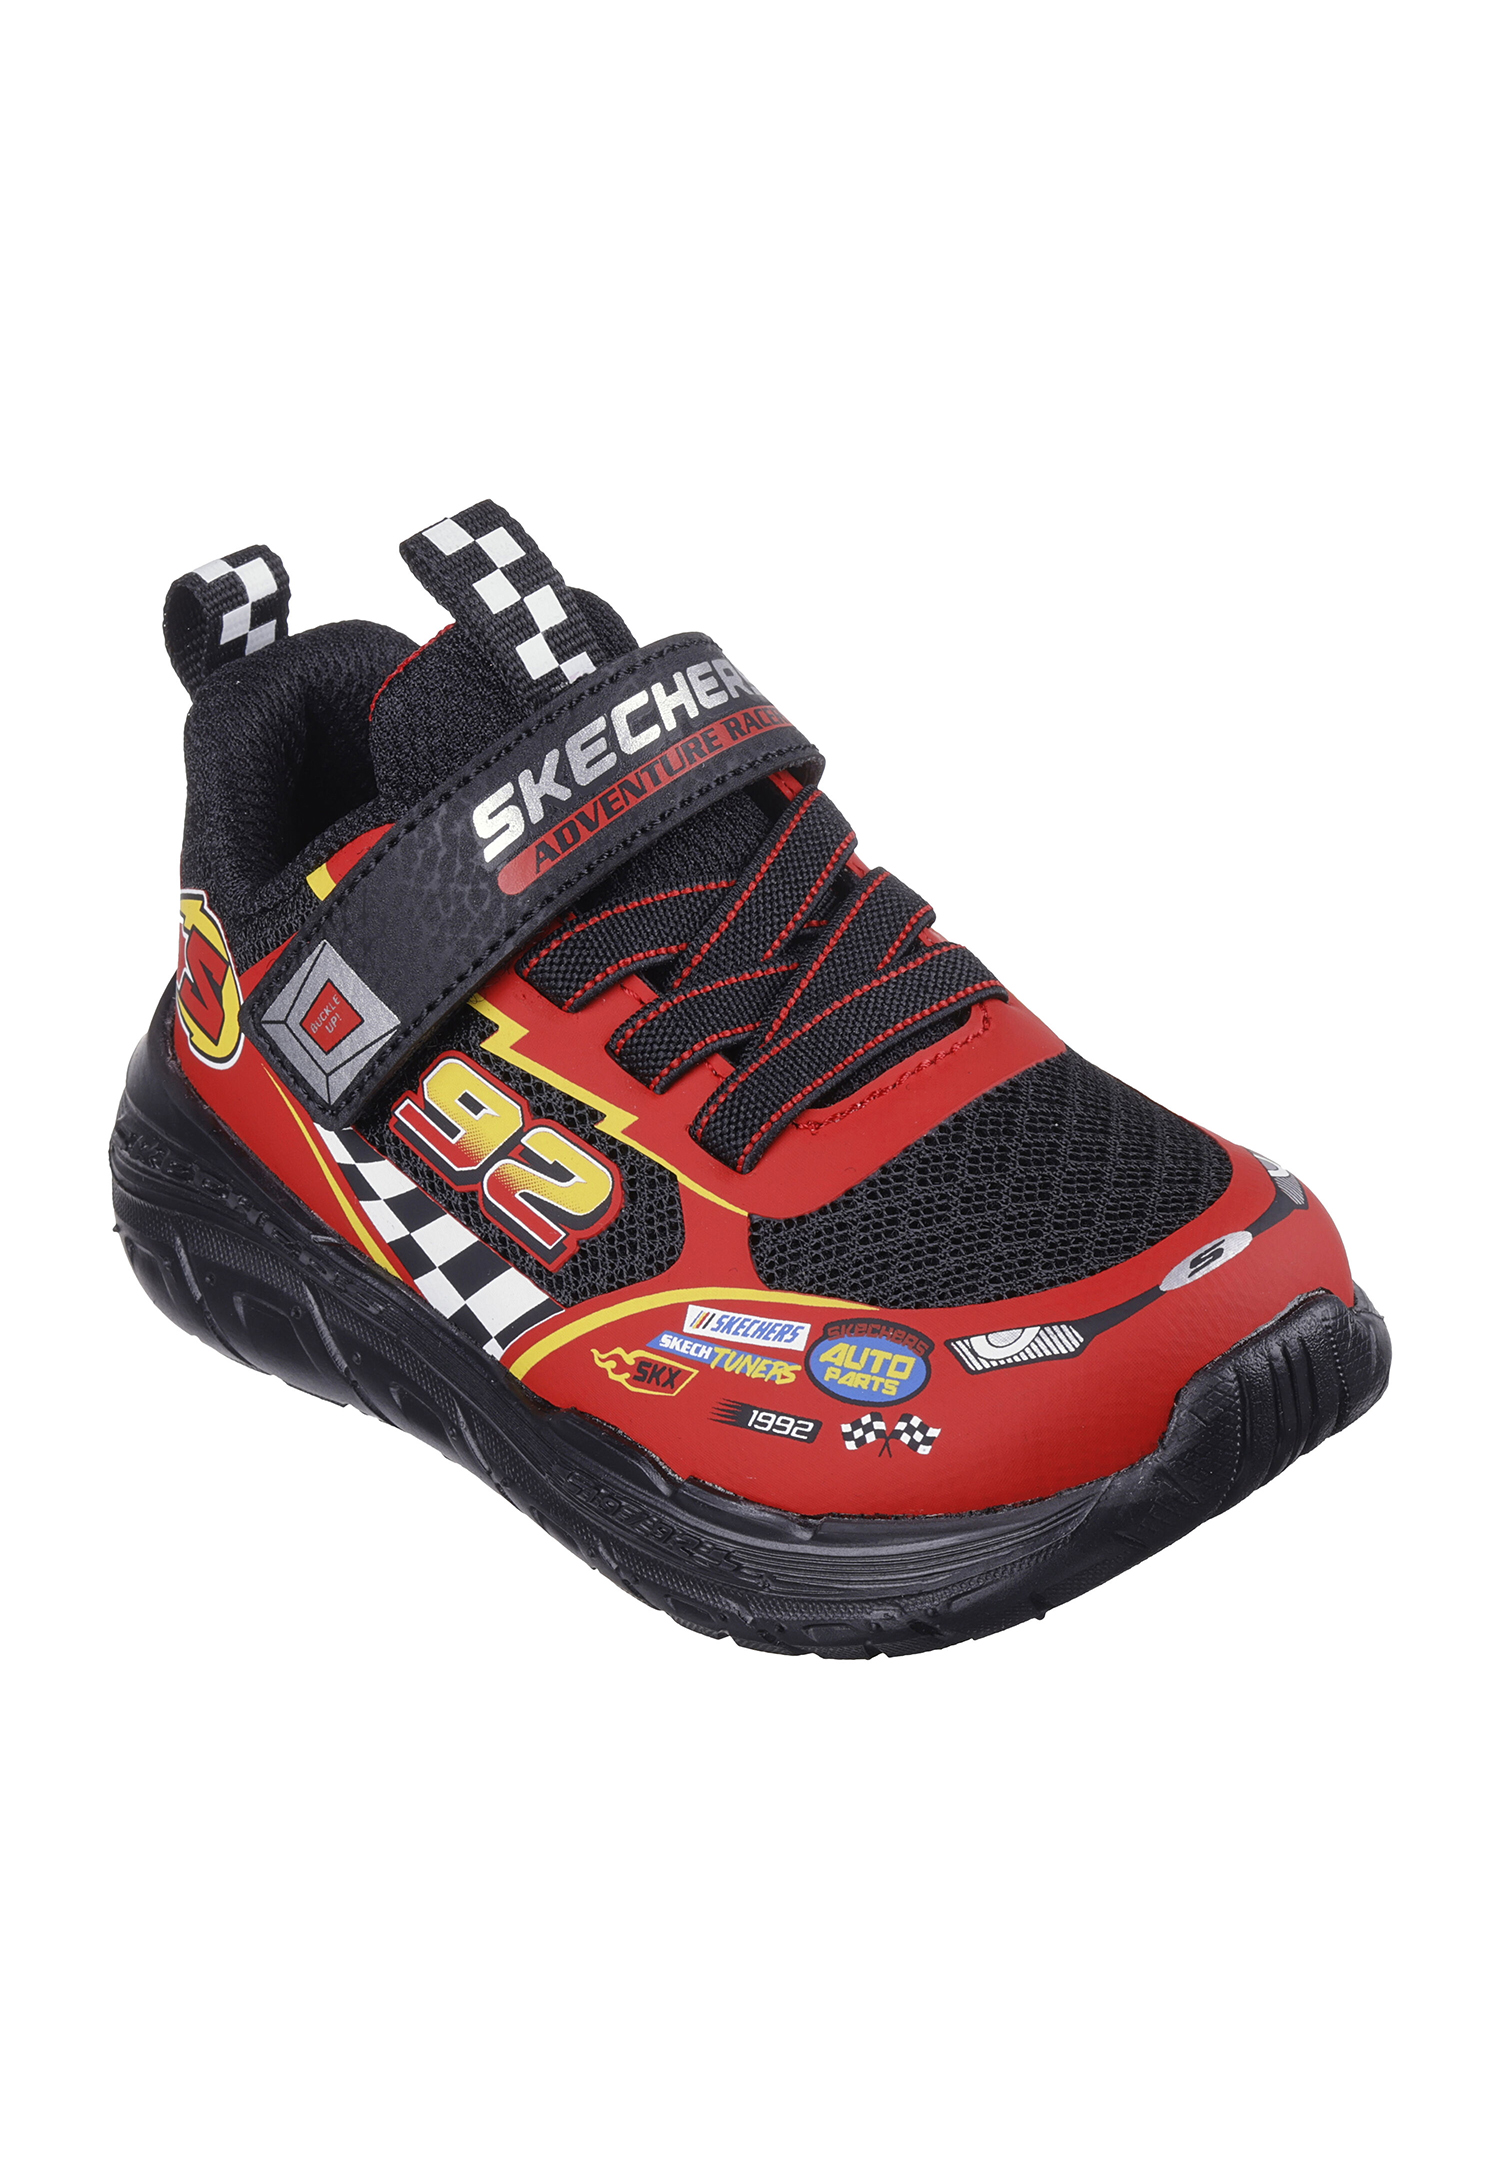 Skechers SKECH TRACKS Tracking Kinder Jungen Sneakers 402303L Schwarz/Rot